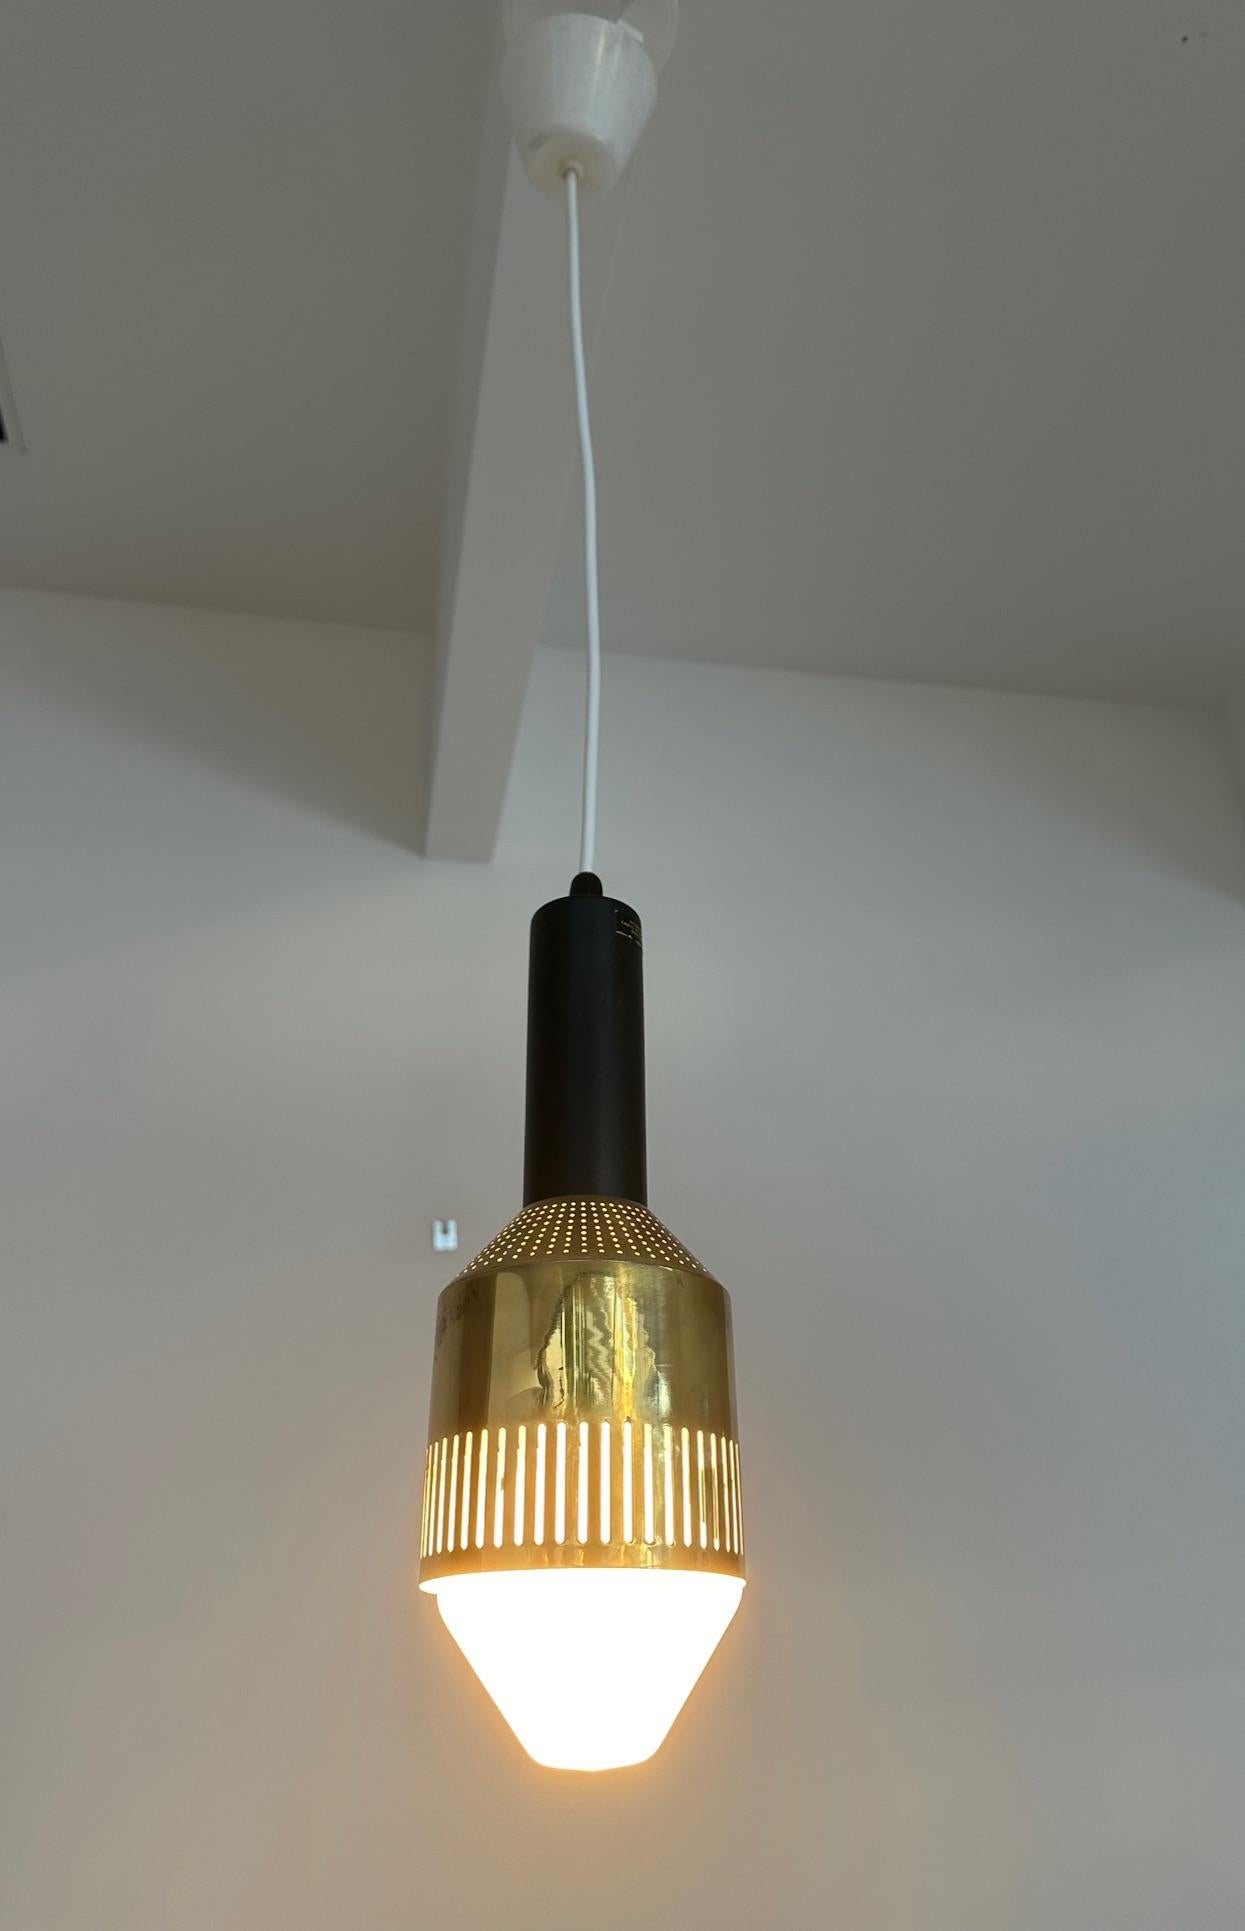 Scandinavian Modern Tapio Wirkkala Rare Ceiling Lamp by Idman Oy Finland 1959-1961 For Sale